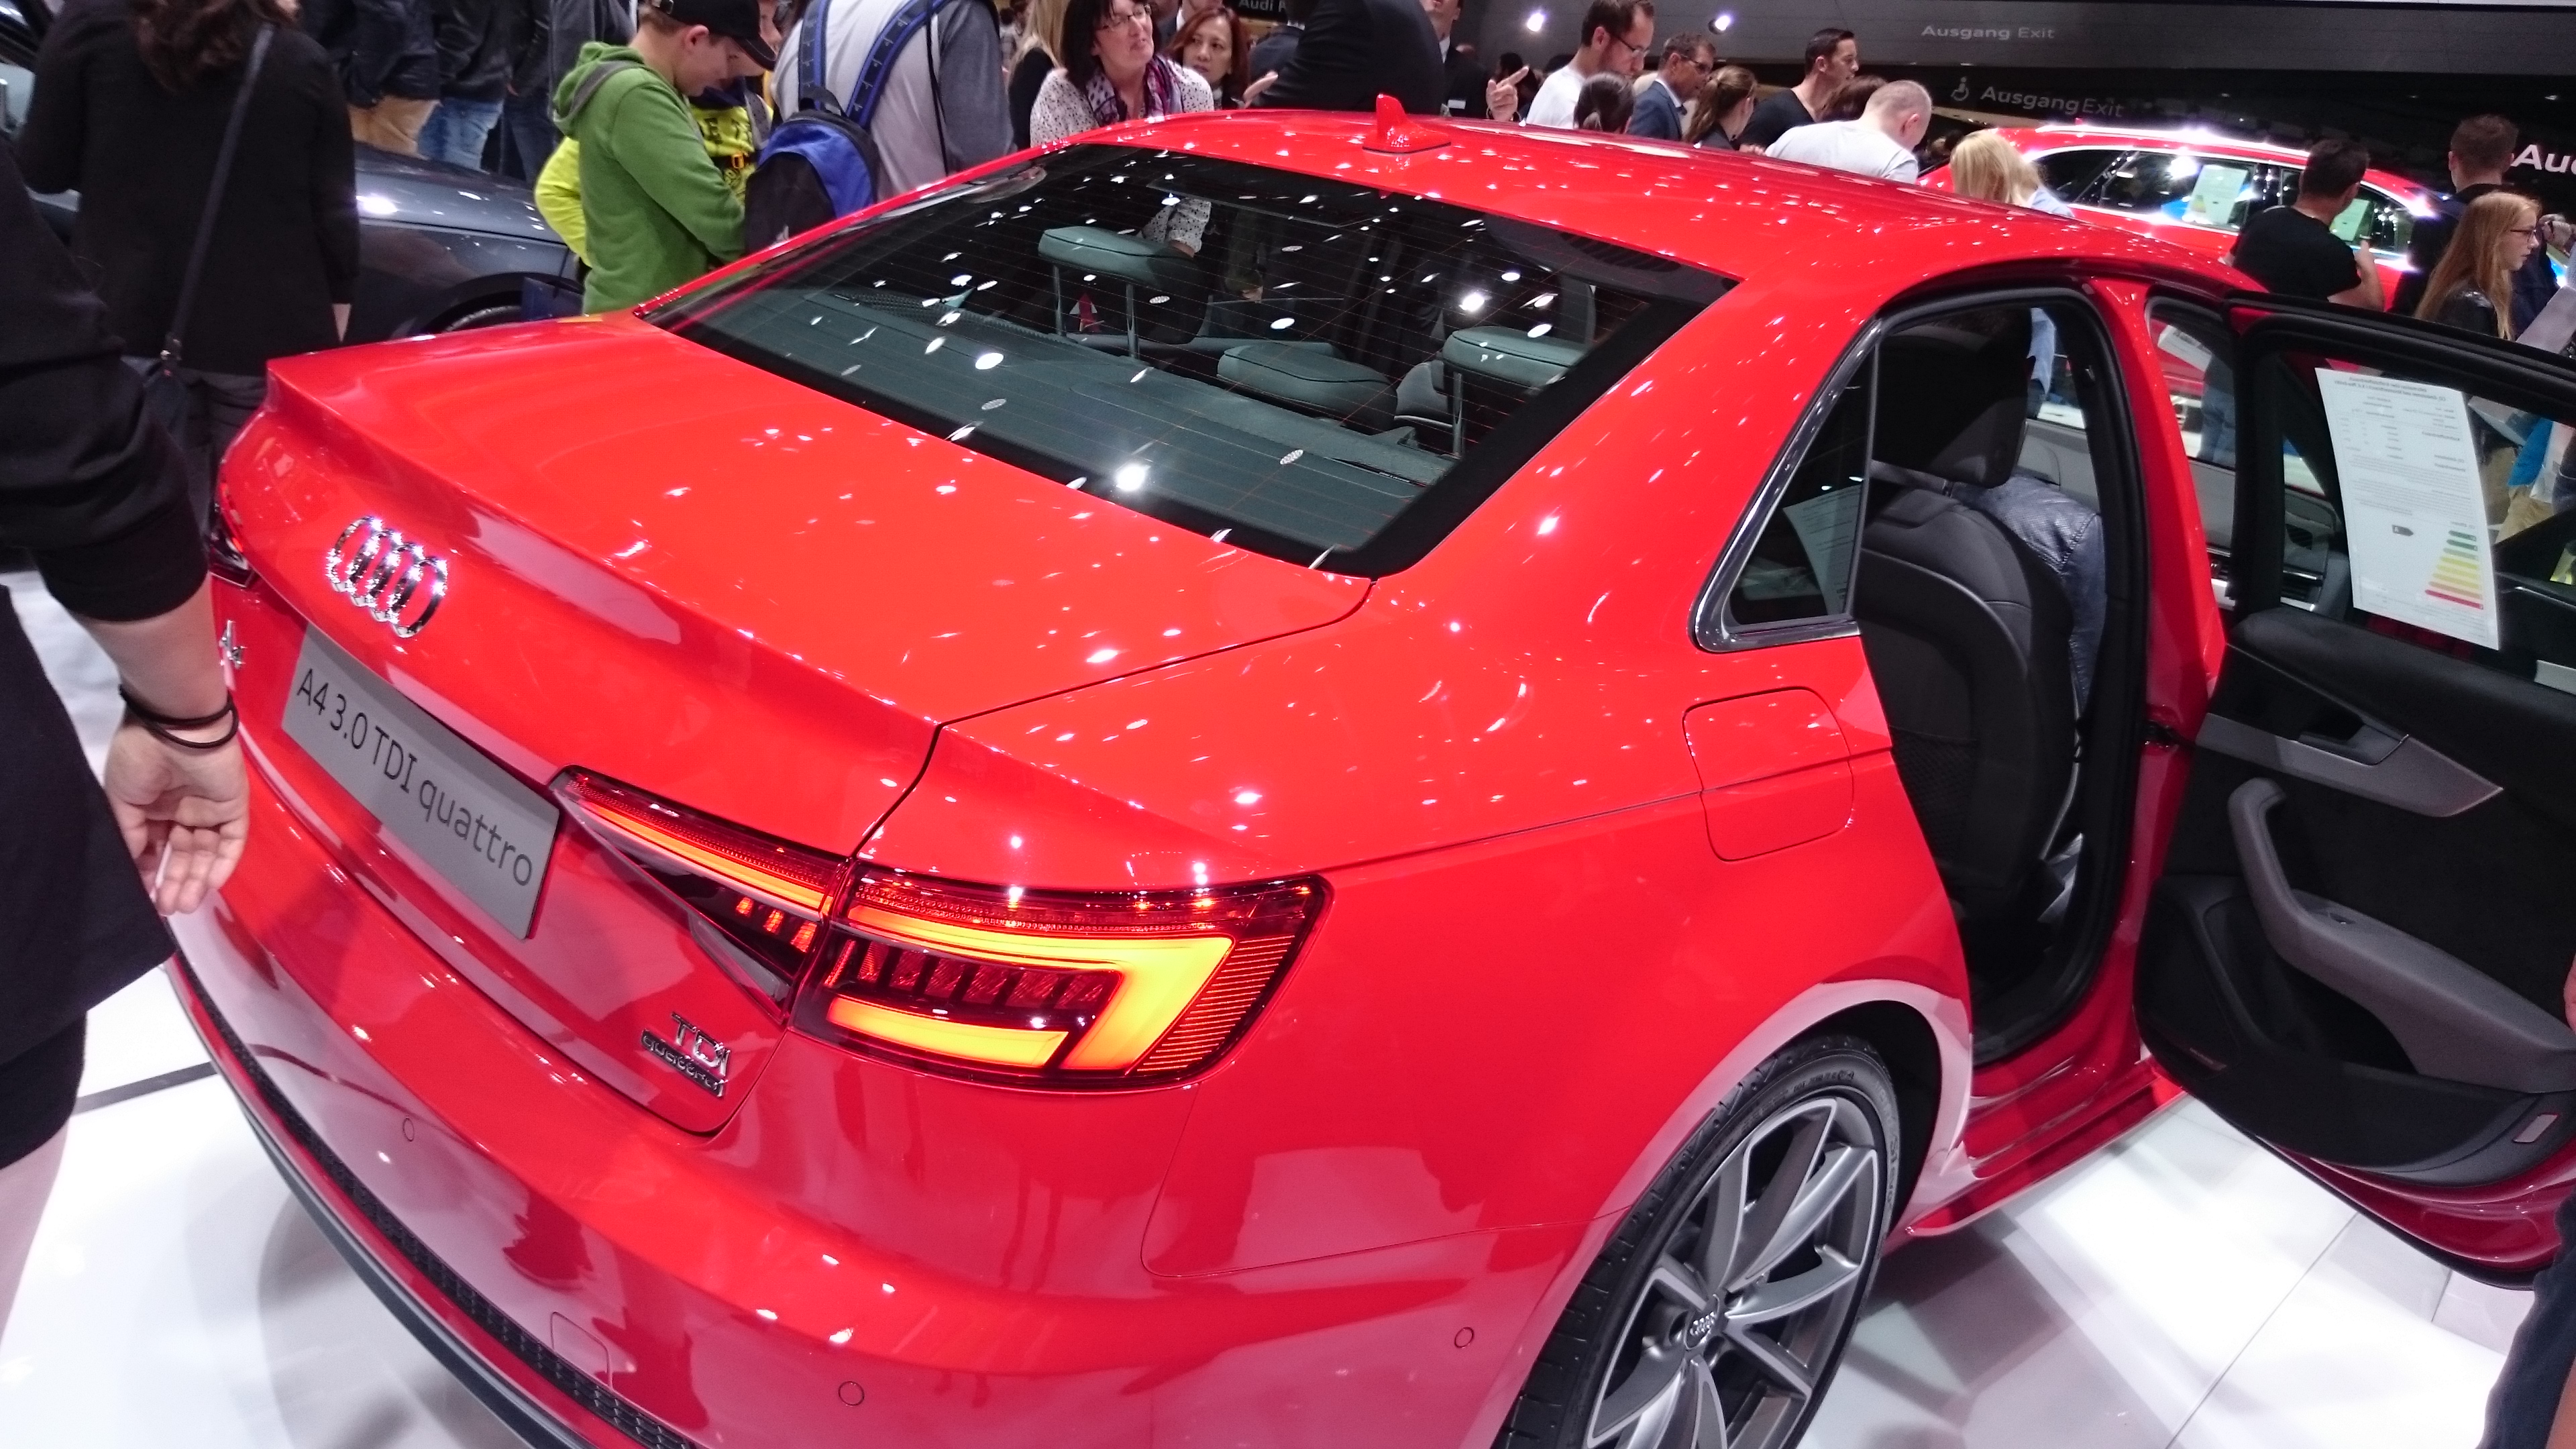 Fotos 360 Audi A4 3.0 TDI Quattro #VidePan en #IAA2015